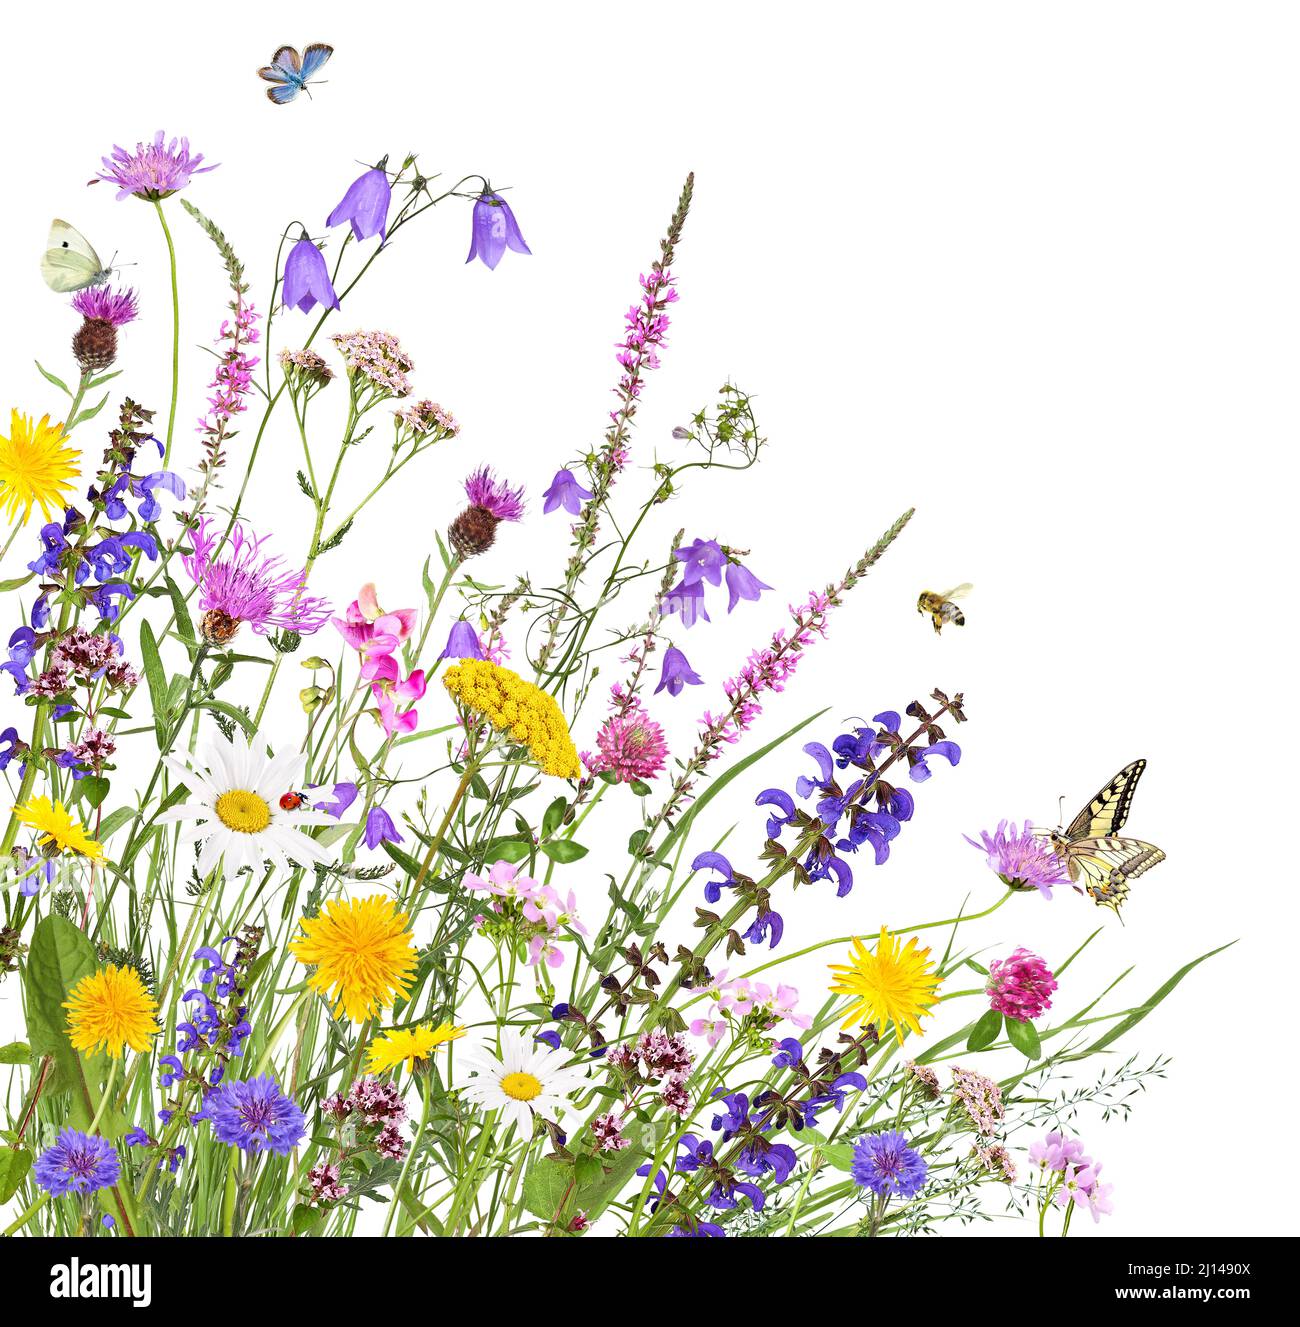 Bunte Wiesenblumen mit Insekten, isoliert Stockfoto